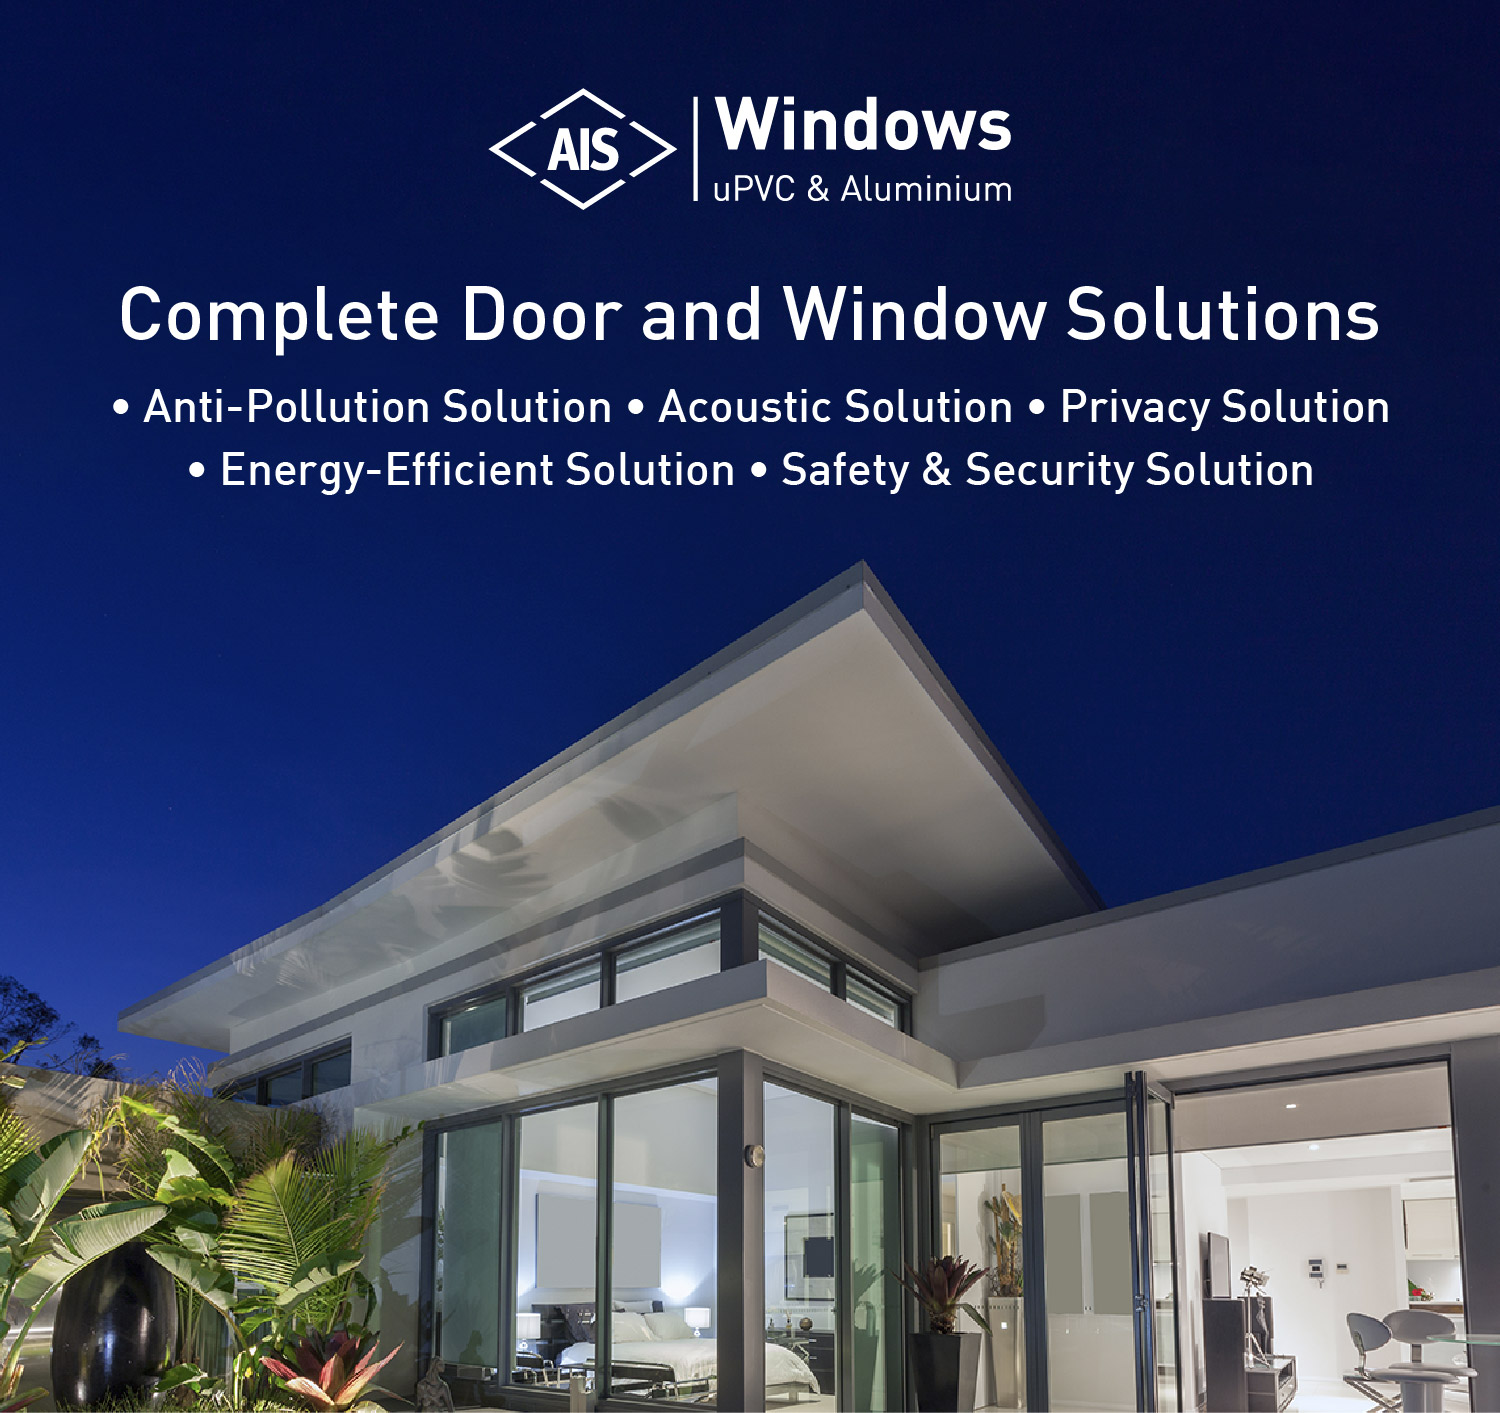 AIS Windows Complete Door and Window Solutions